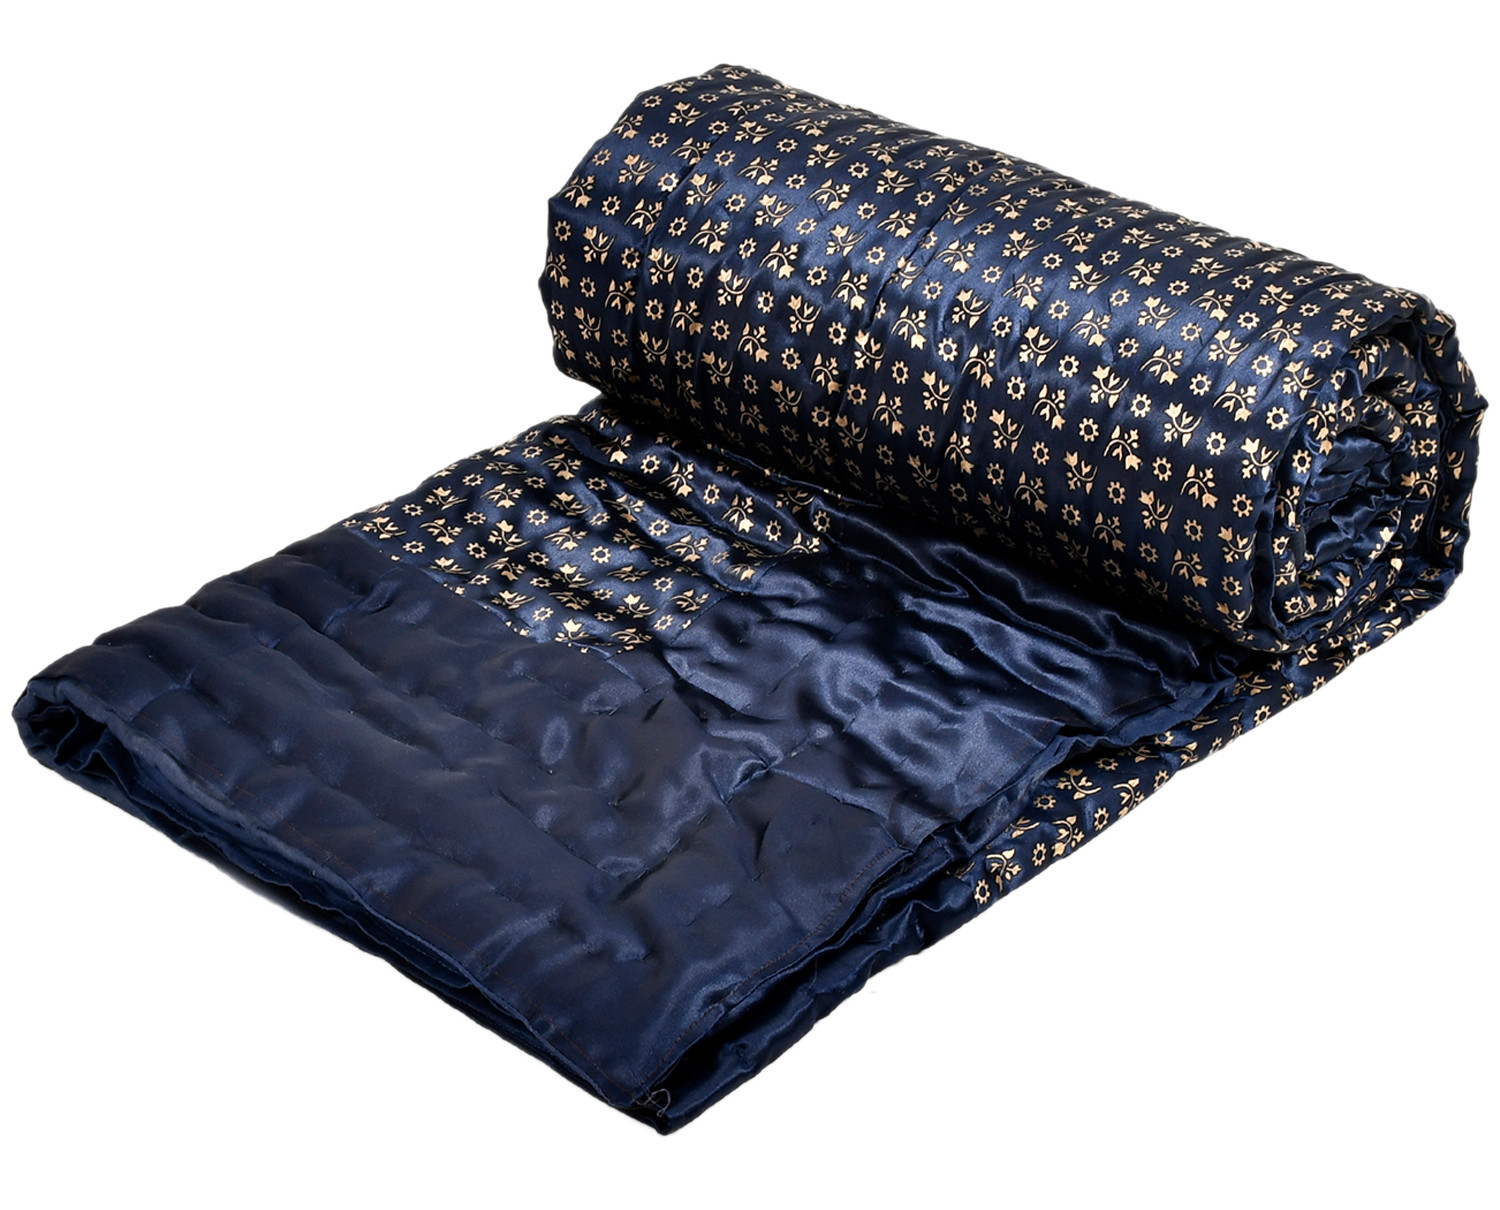 Kuber Industries Floral Print Soft Light Weight Microfiber Filler Silk Double Bed Razai, Quilt, Comforter, Blanket, 90